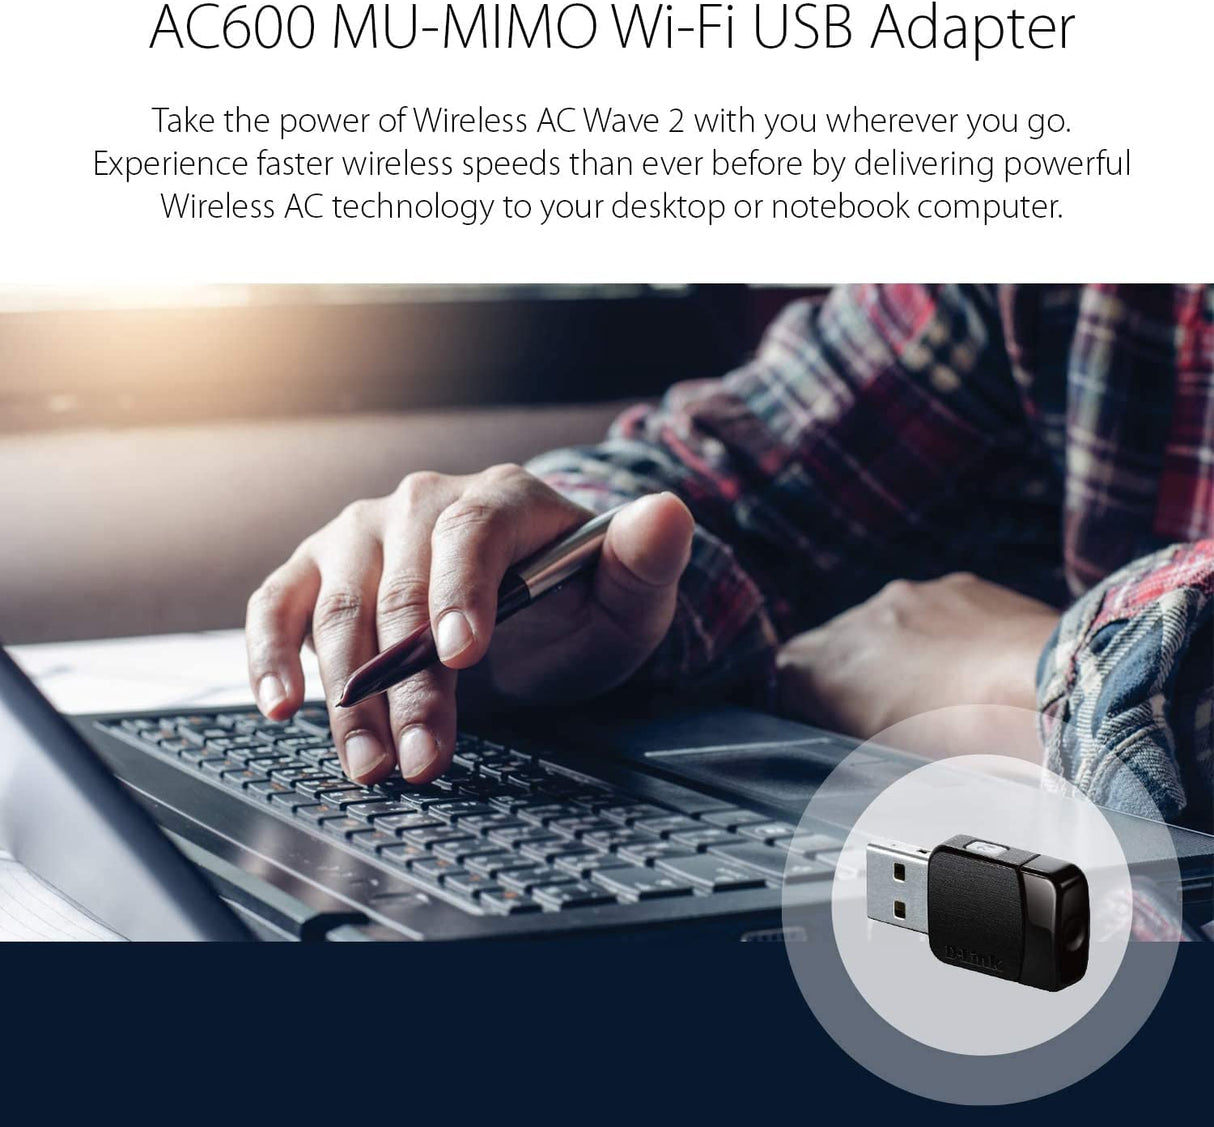 D-Link USB WiFi Adapter AC600 Mini Wireless Internet Dual Band MU-Mimo Wi-Fi Network Desktop Laptop (DWA-171),Black